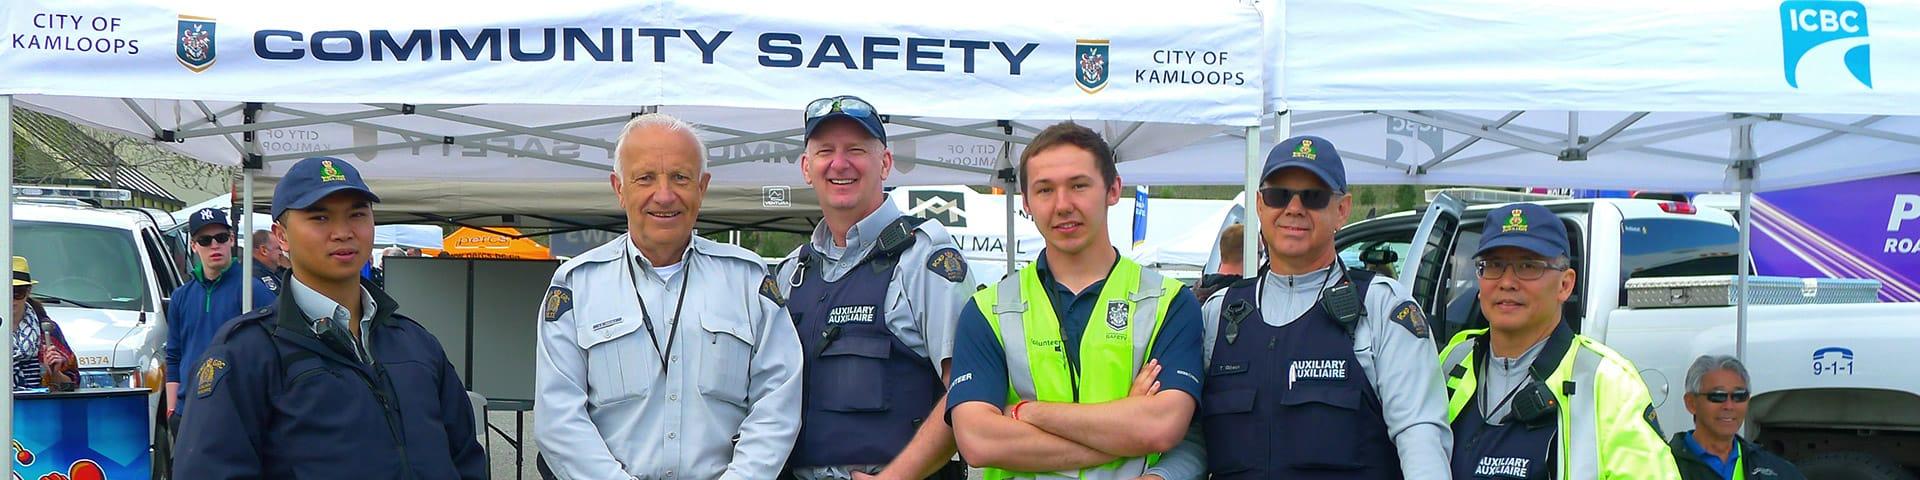 Kamloops community safety